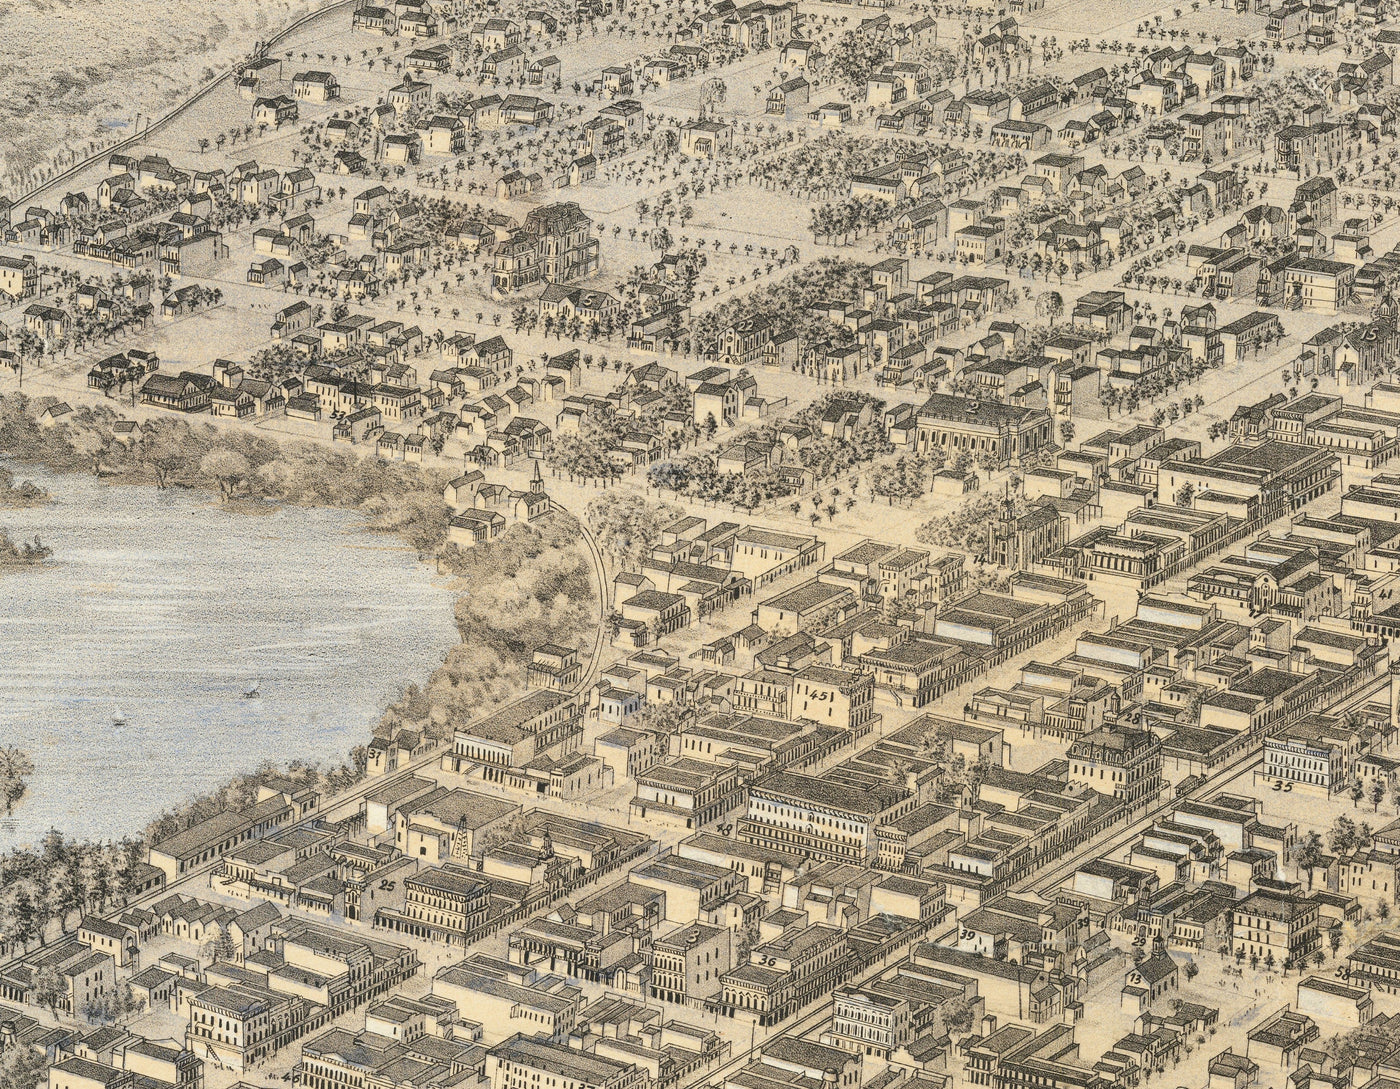 Old Birds Eye Map of Sacramento by Augustus Koch, 1870 - Downtown, Midtown, California Capitol